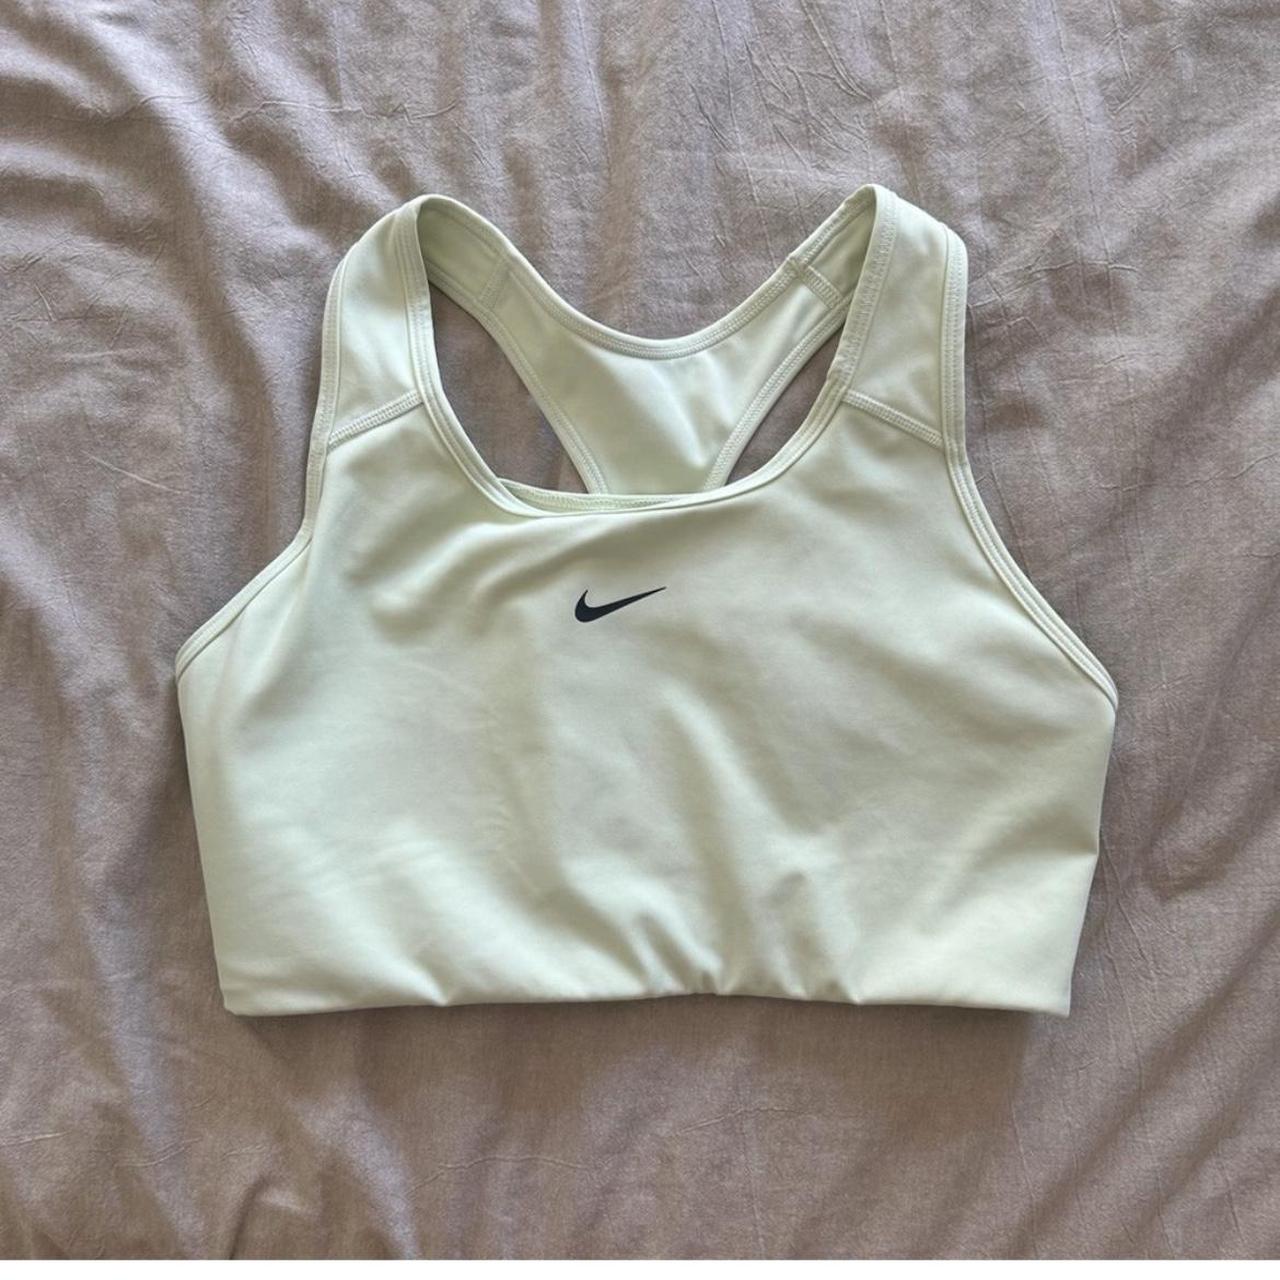 Nike sports bra - Depop